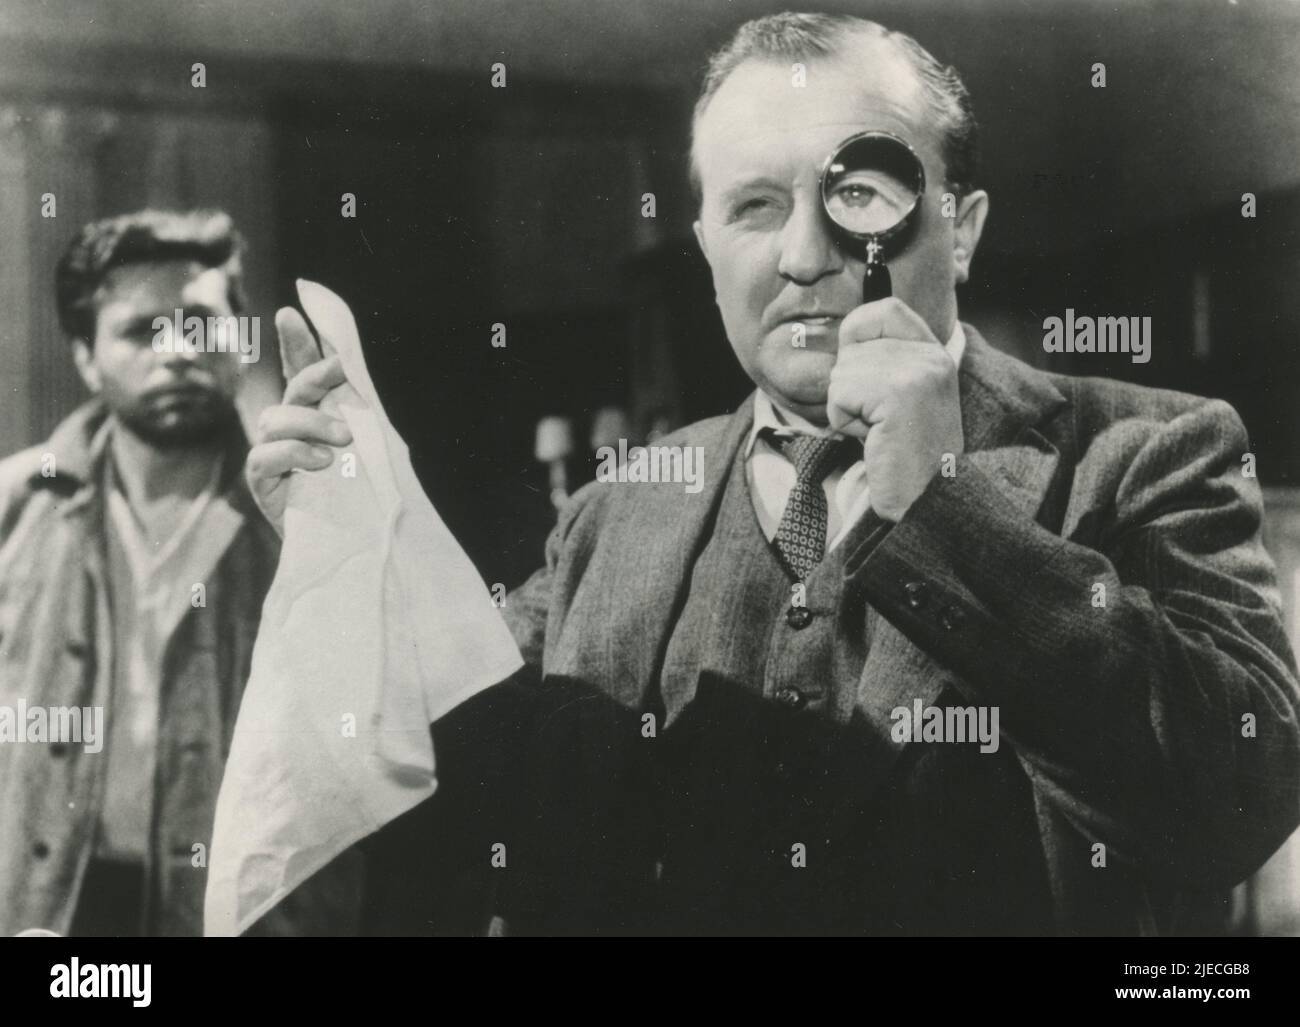 Actores Erwin Strahl y Siegfried Lowitz en la película The Frog with the Mask, DK 1959 Foto de stock